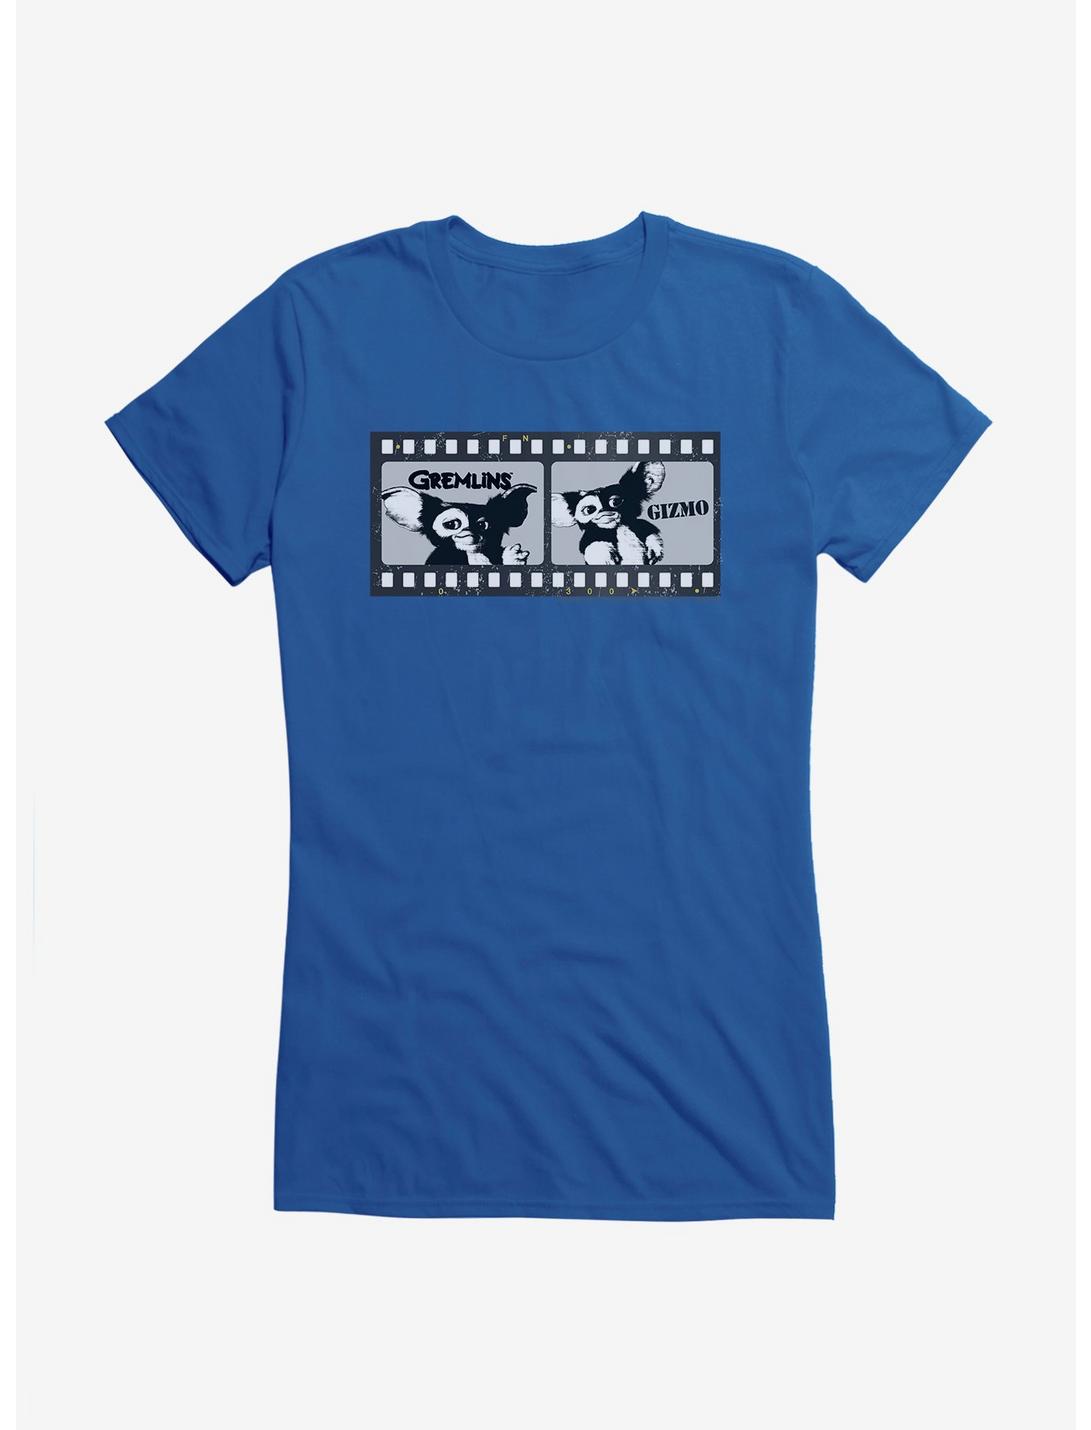 Gremlins Gizmo Film Strip Black And White Girls T-Shirt, , hi-res